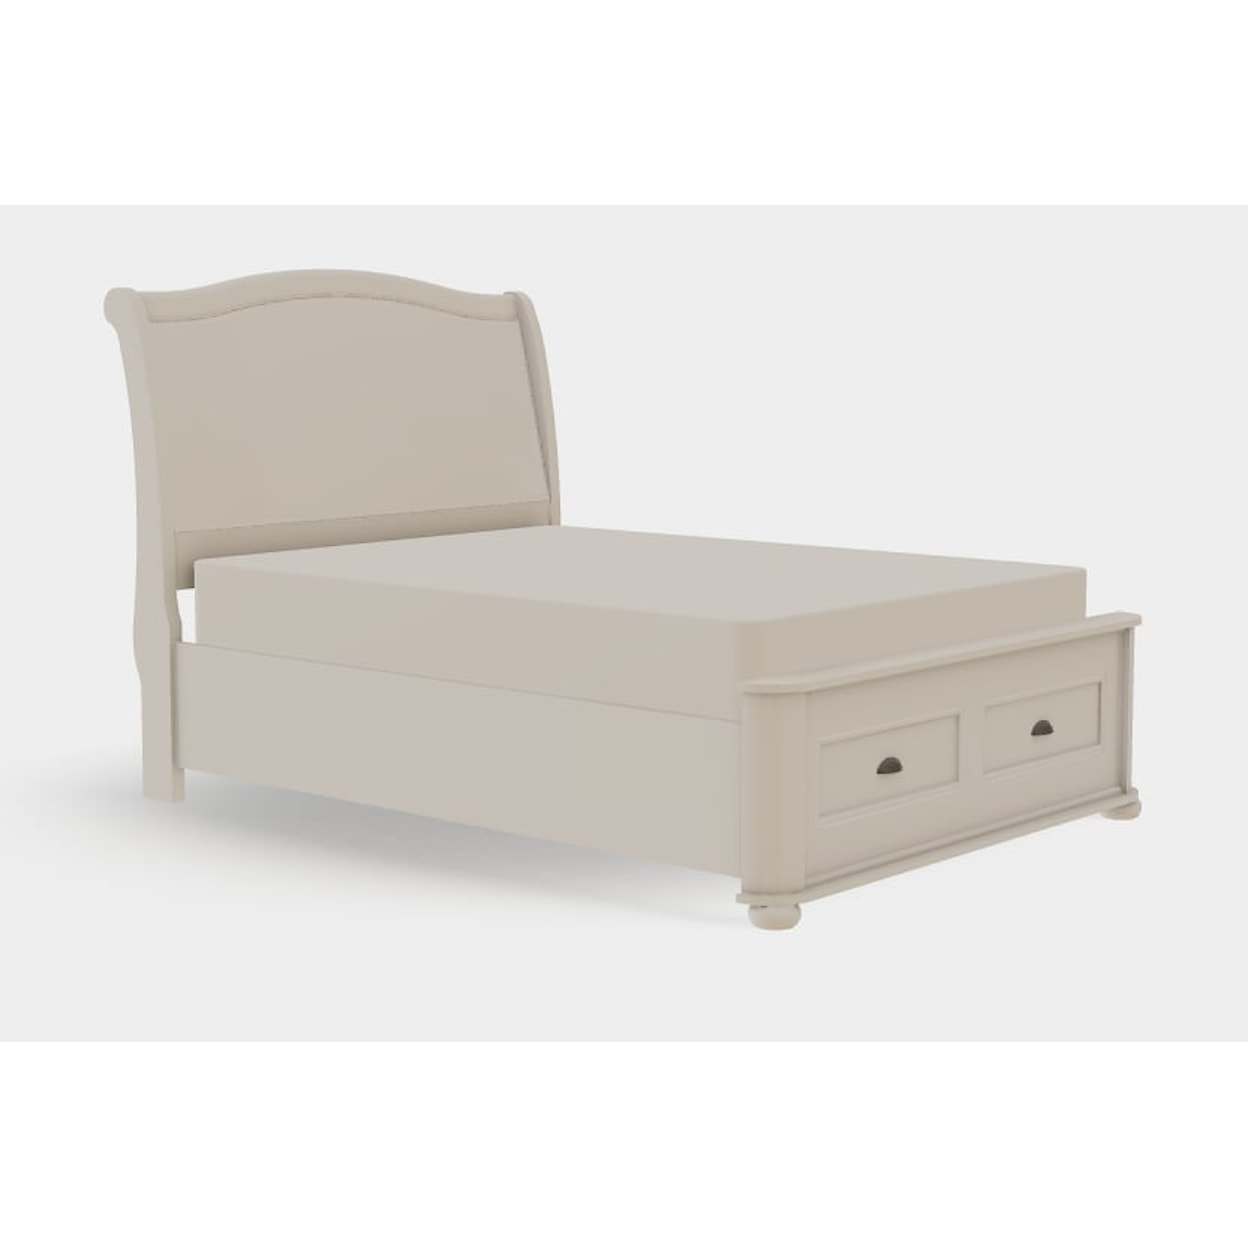 Mavin Kingsport Queen Upholstered Bed Drawer End